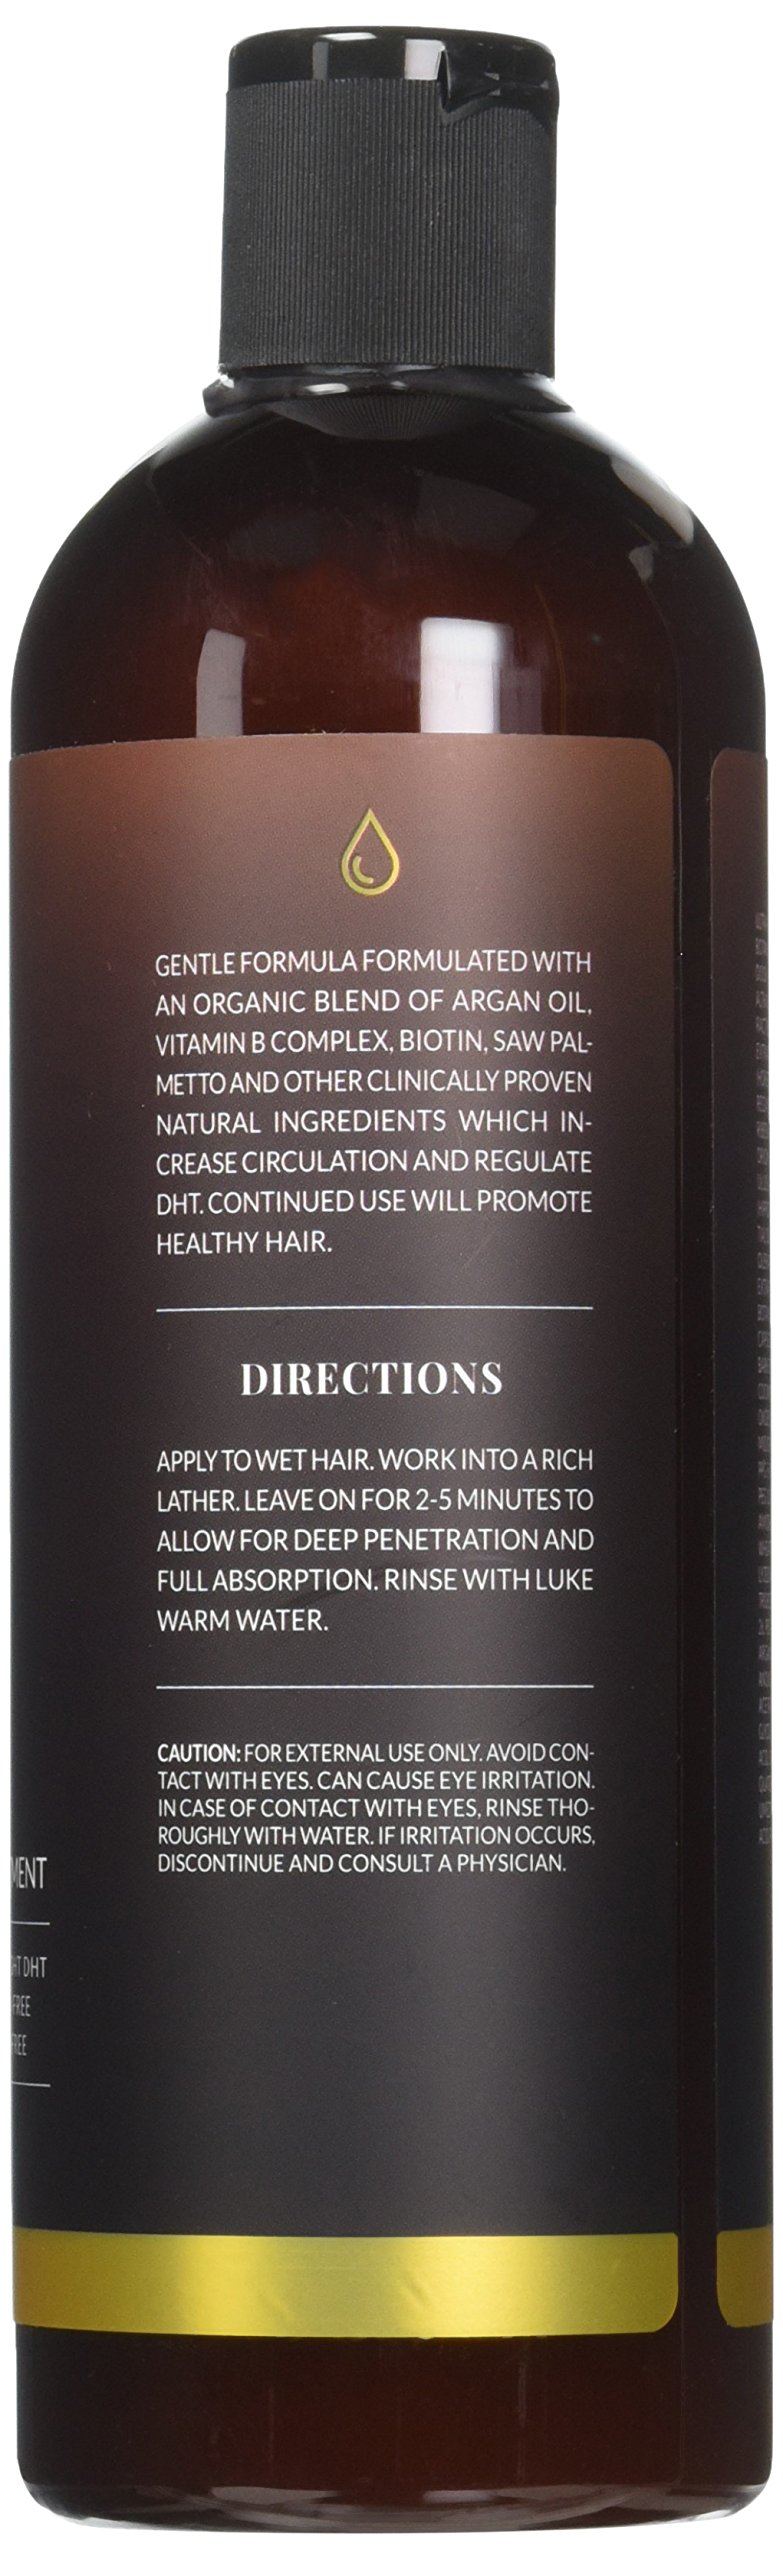 Artnaturals Argan Hair Regrowth Shampoo, 16 Ounce